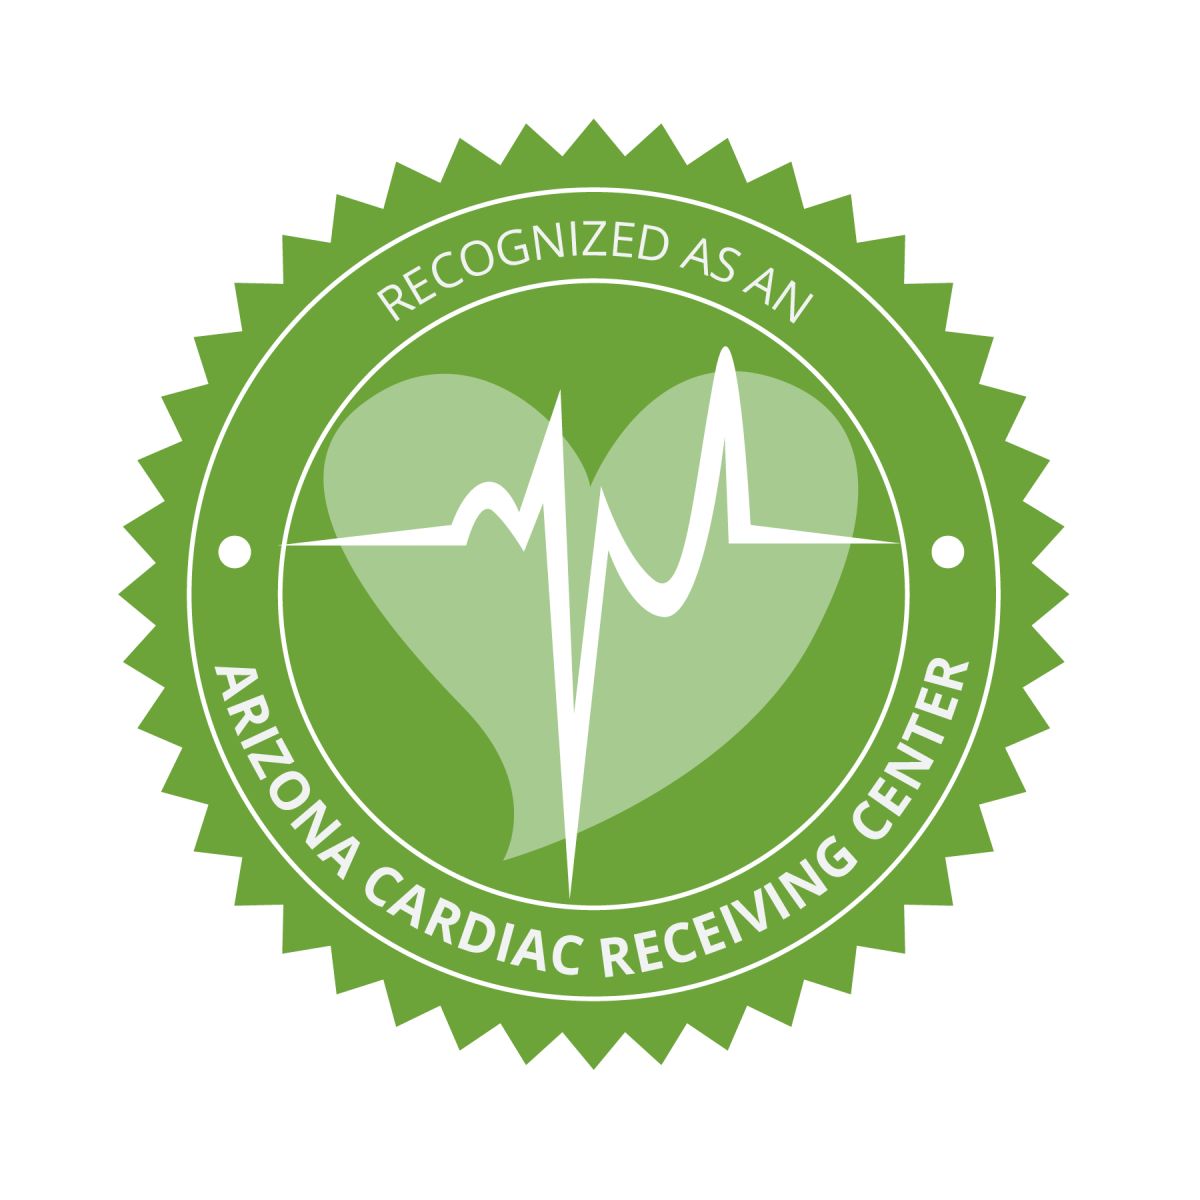 Arizona Cardiac Receiving Center